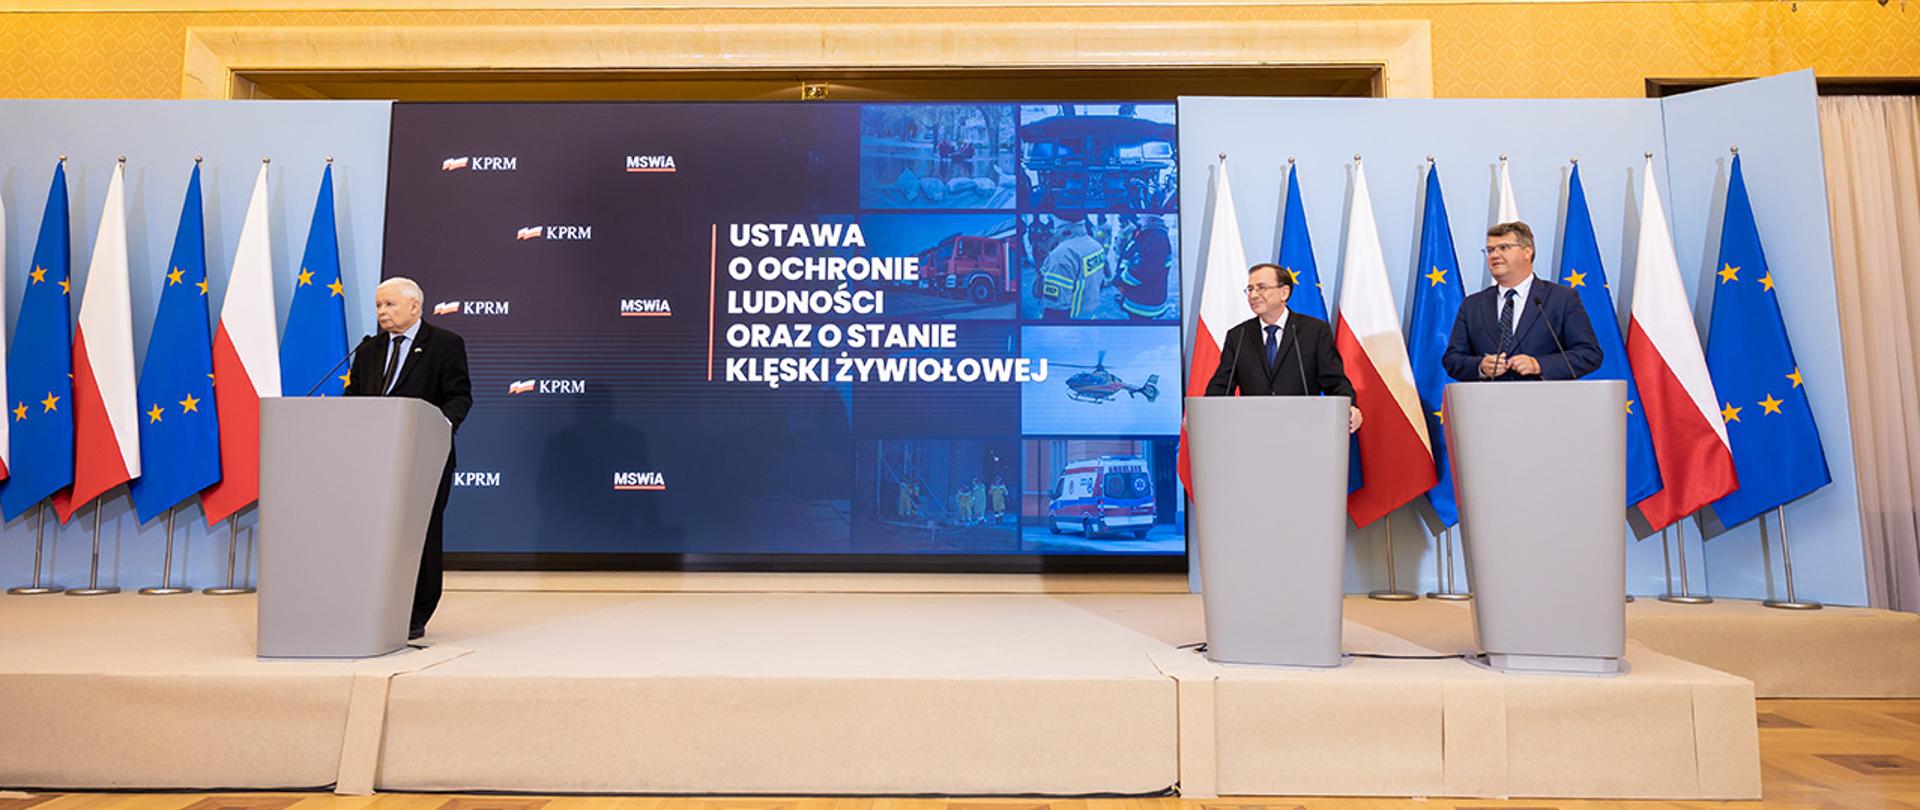 Deputy Prime Minister Jarosław Kaczyński, Minister Mariusz Kamiński and Deputy Minister Maciej Wąsik during a joint press conference at the Chancellery of the Prime Minister.